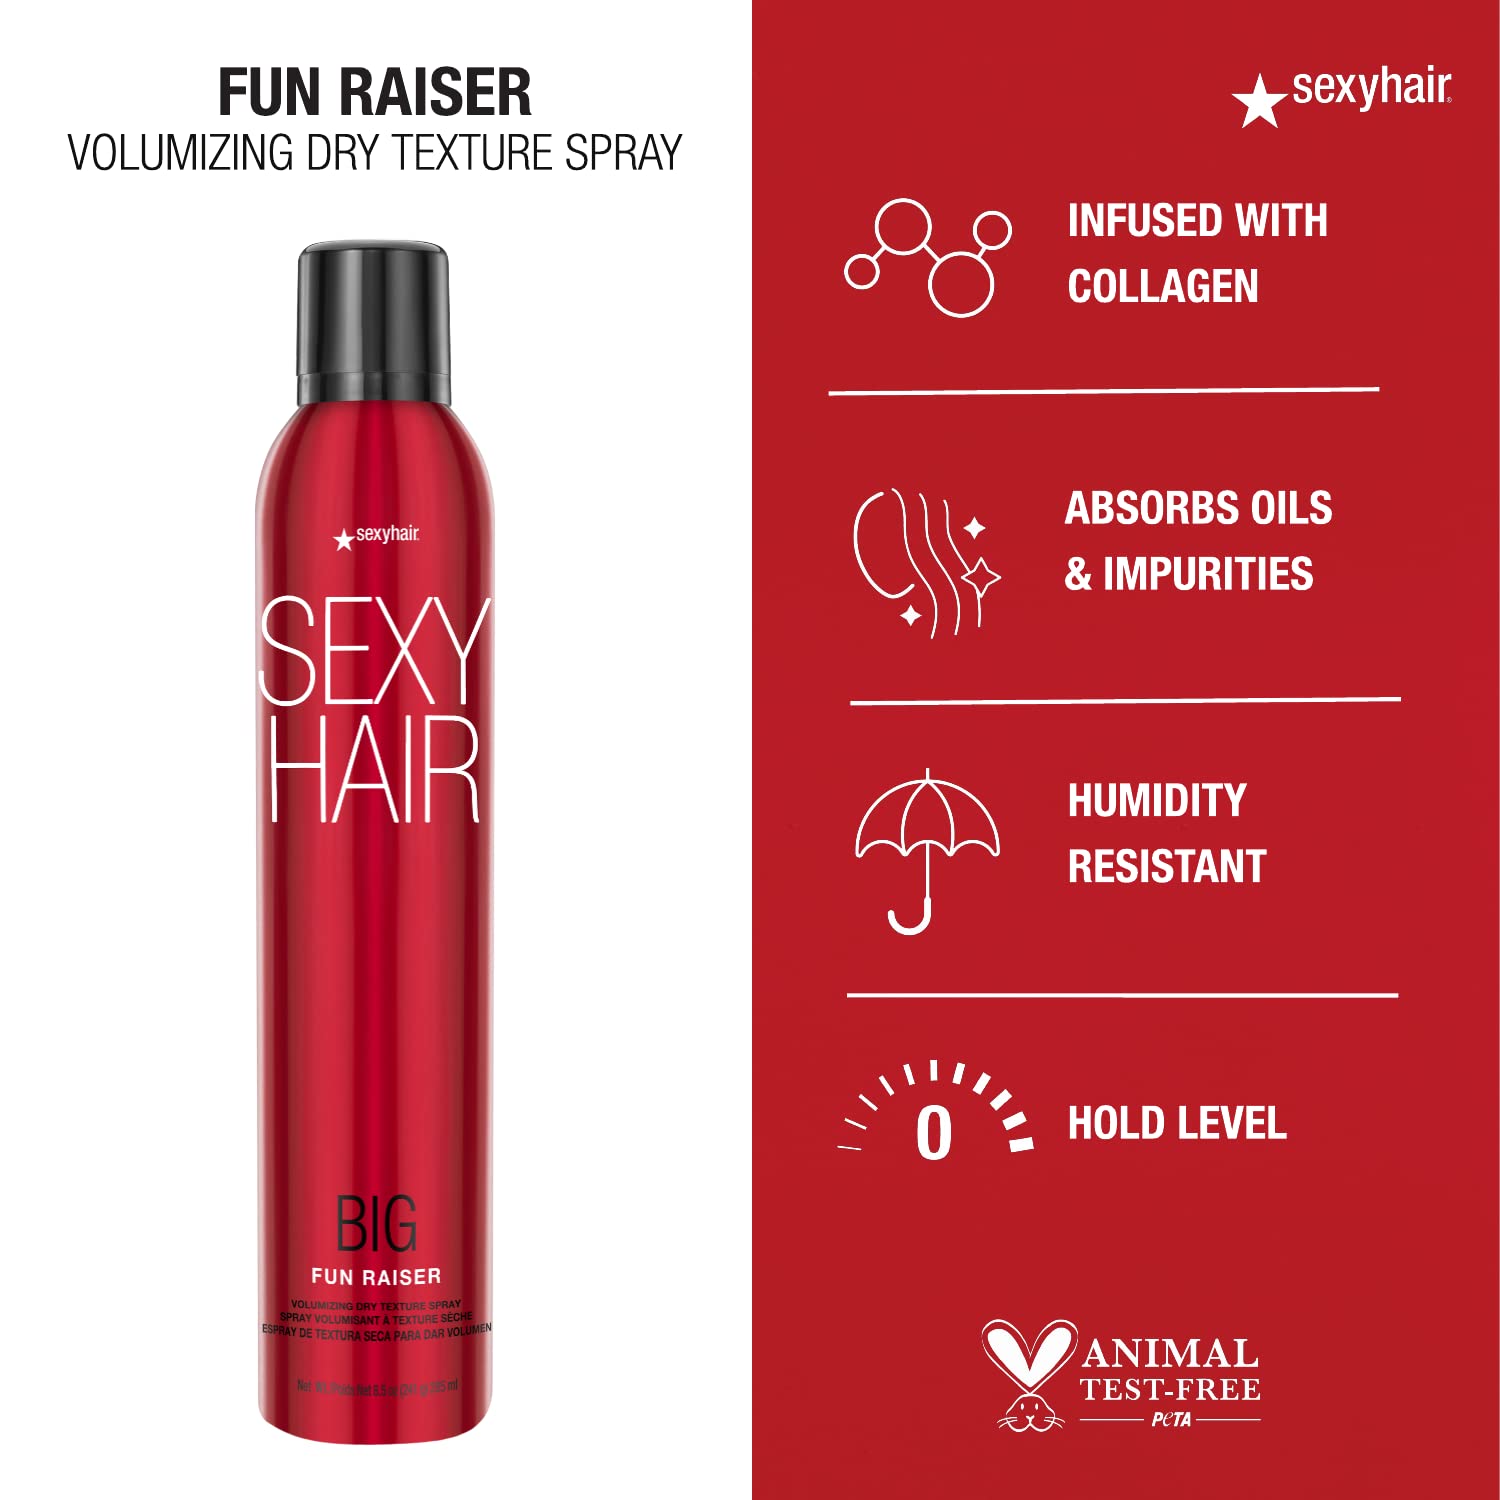 Big Sexy Hair Fun Raiser Texture Spray Benefits